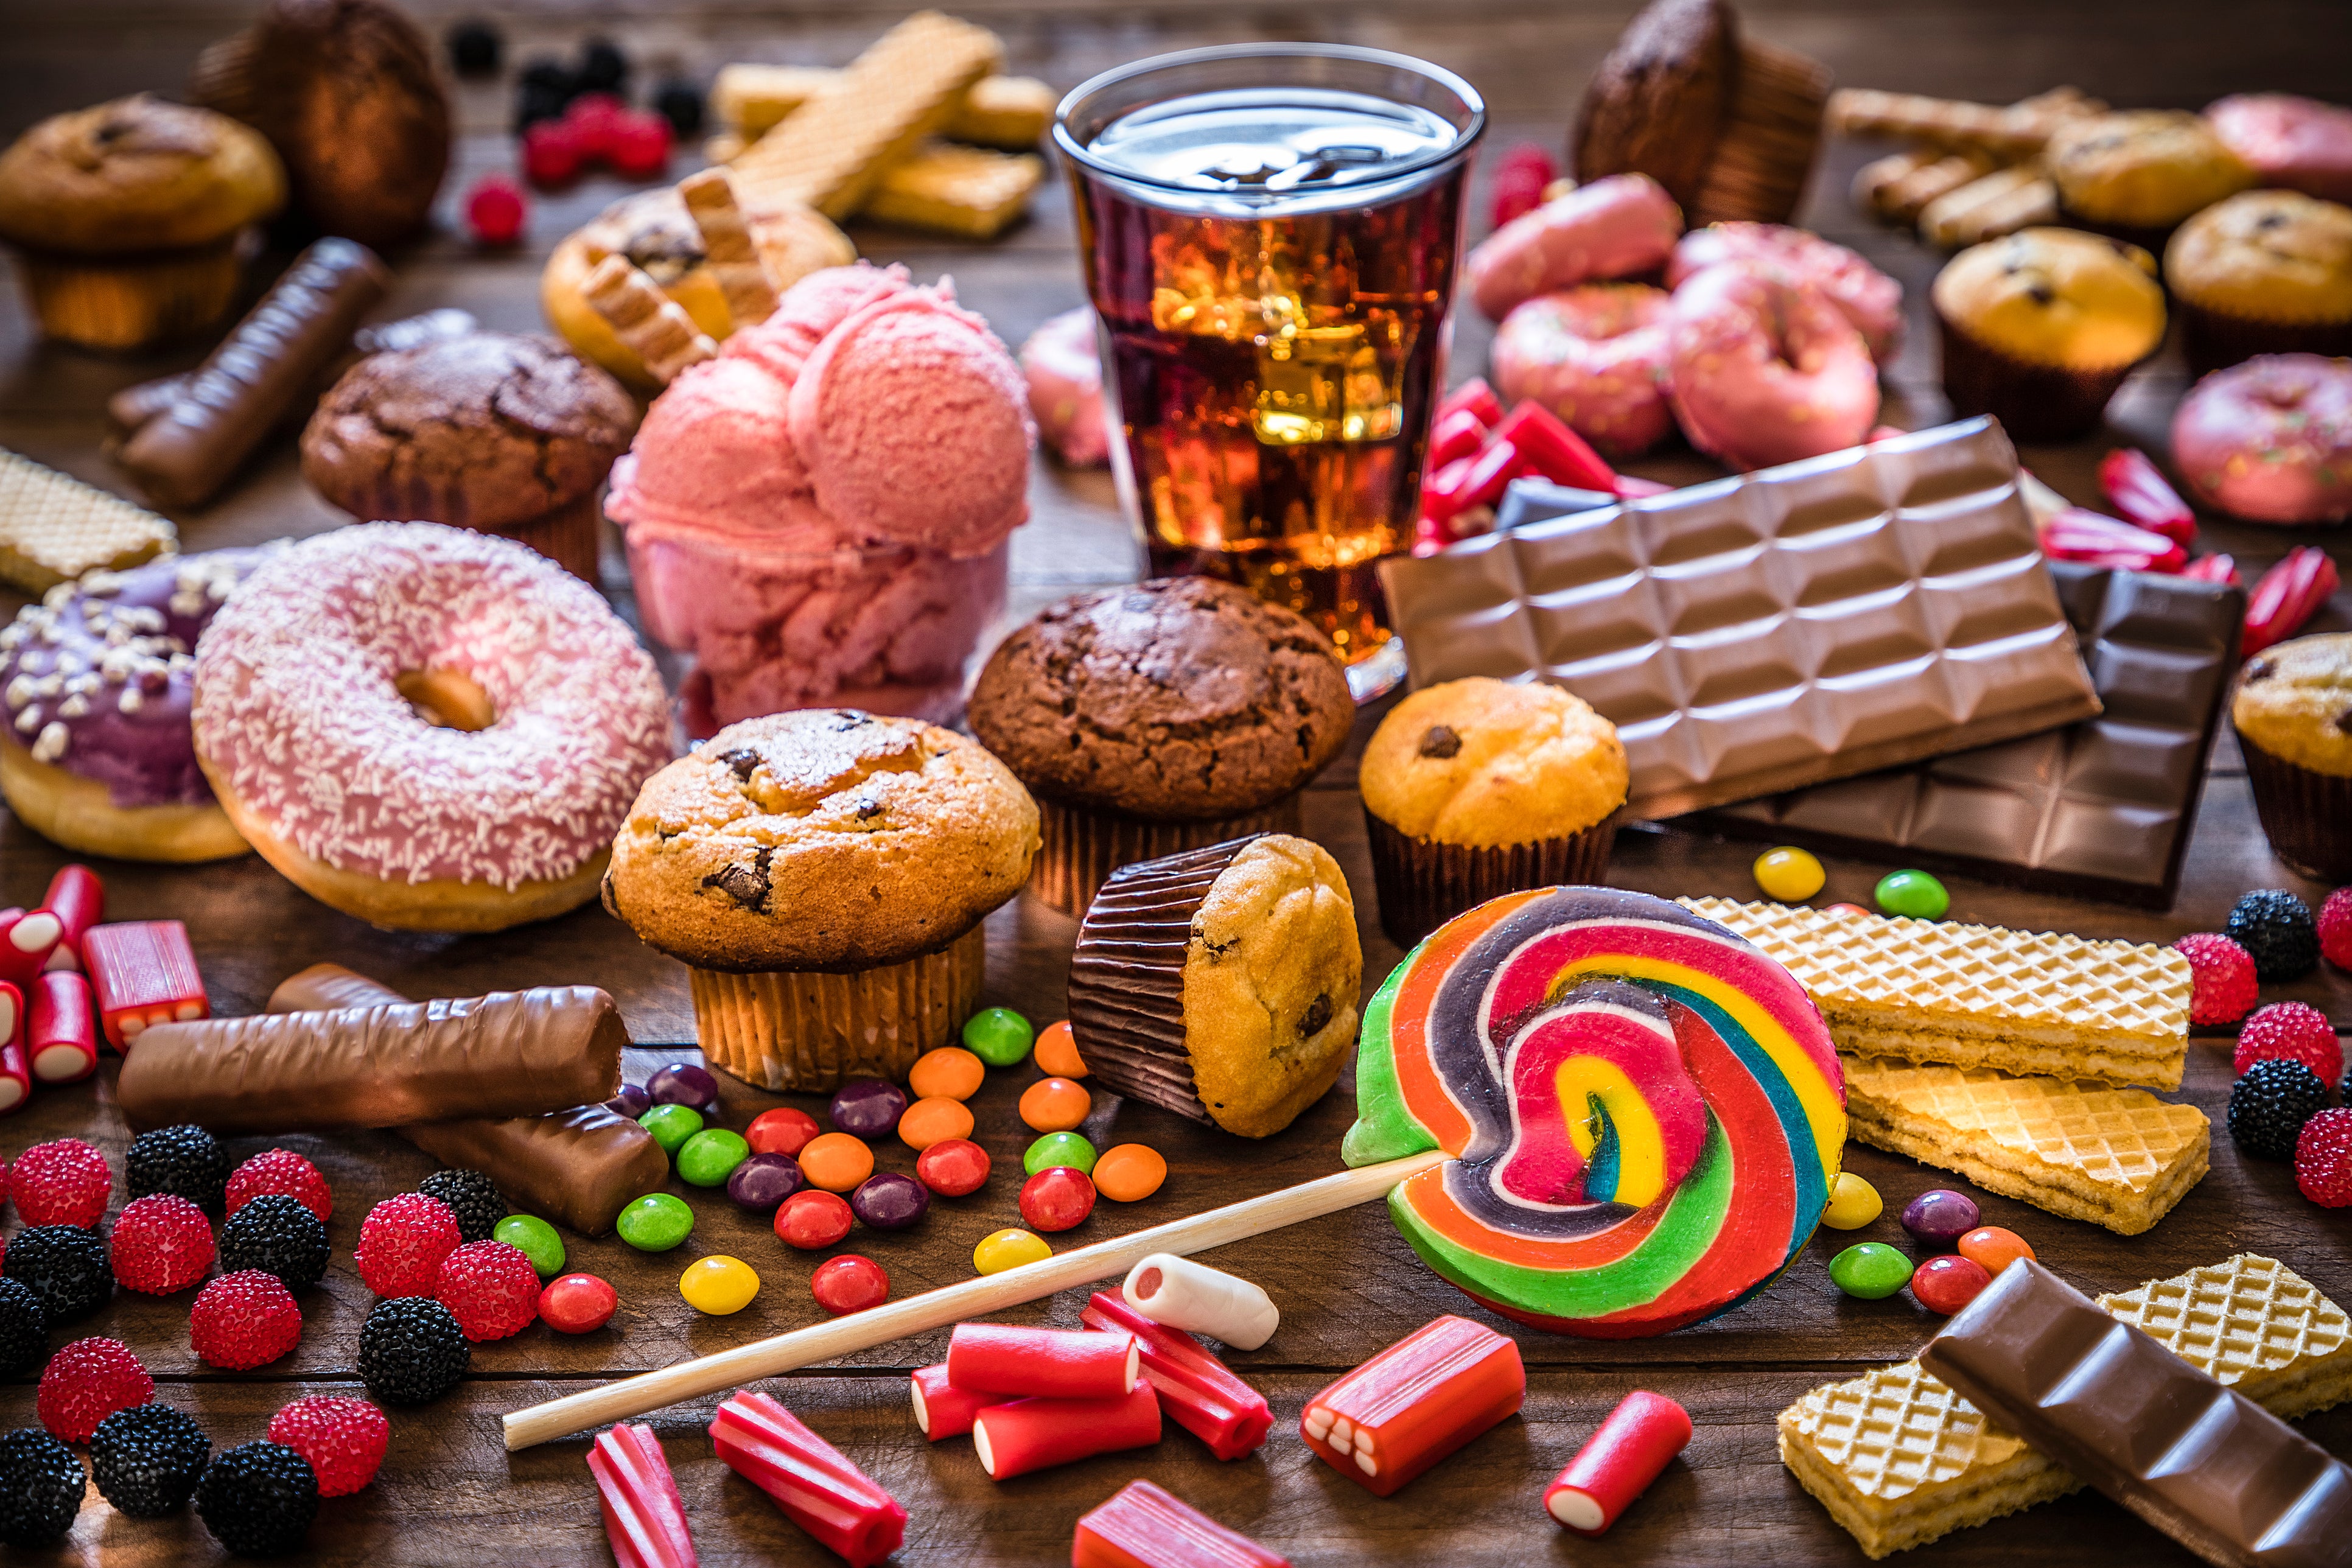 Sugar makes the brain release the pleasure chemical dopamine